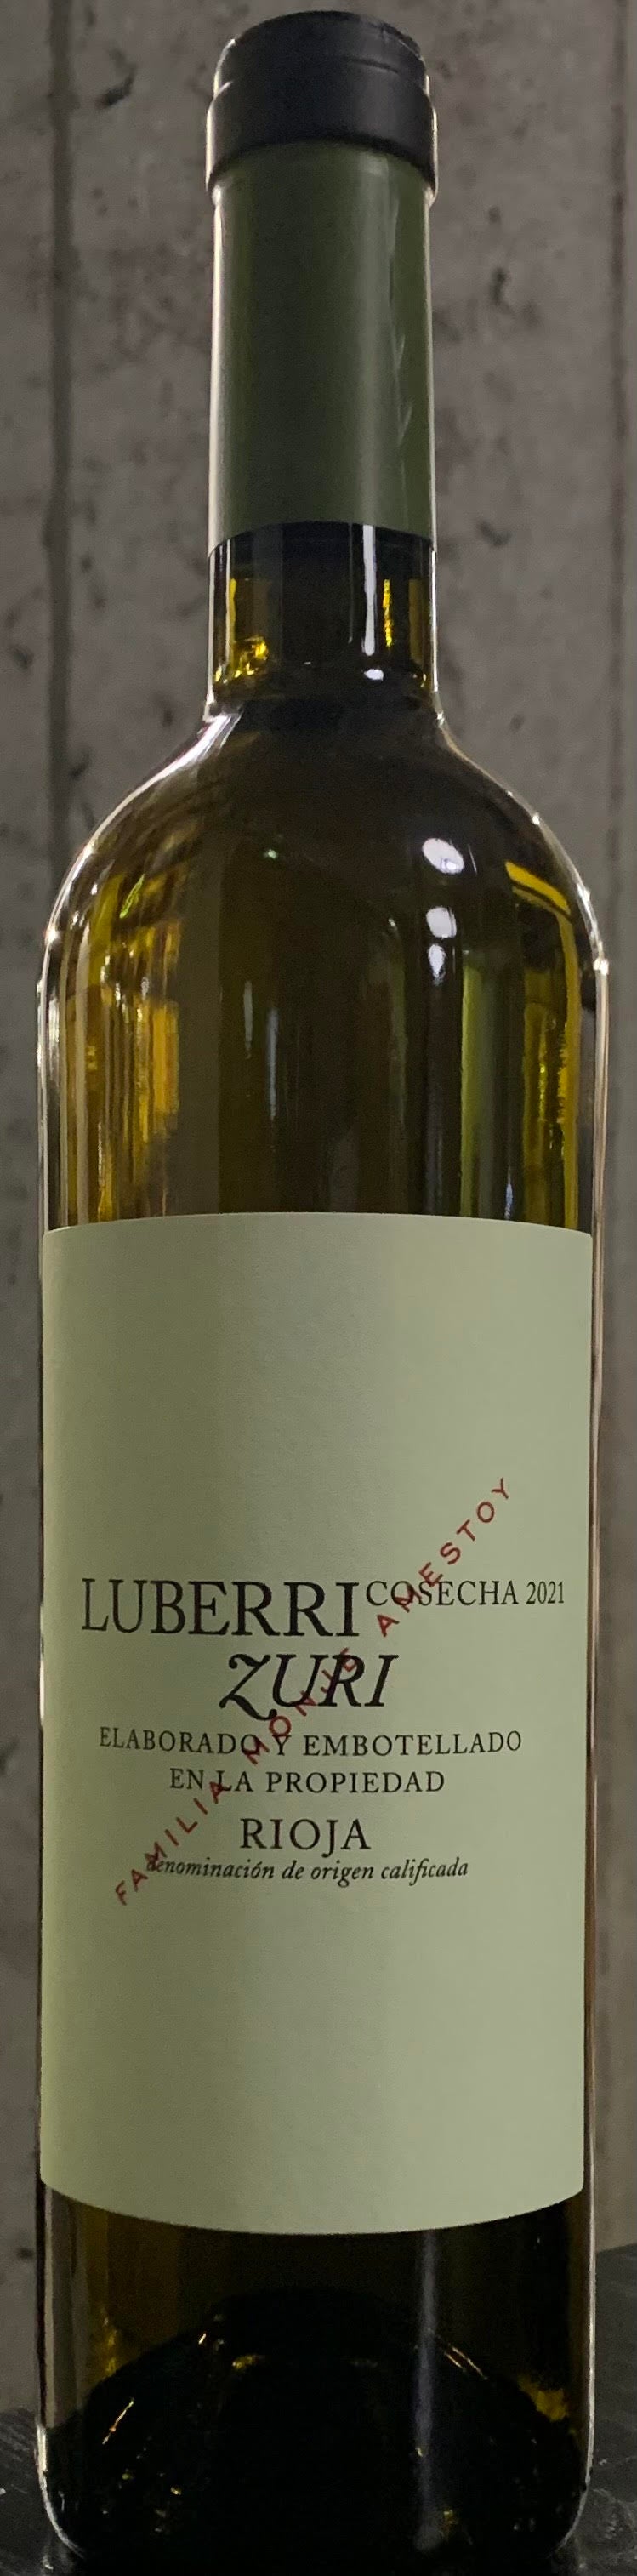 Luberri "Zuri" Rioja Blanco '21